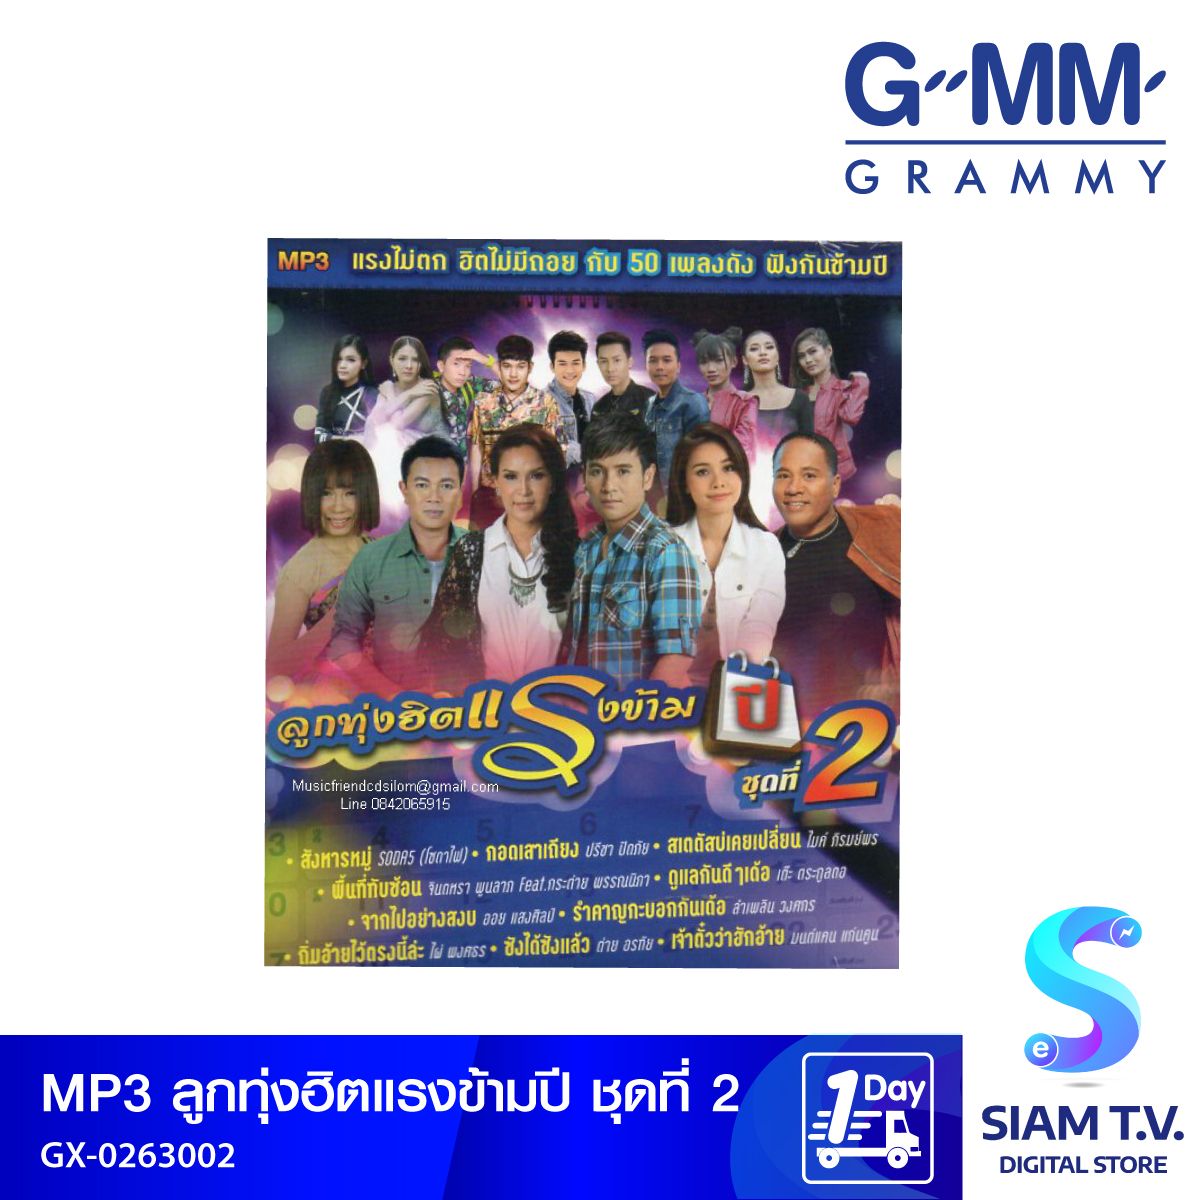 GMM GRAMMY  MP3 ลูกทุ่งฮิตแรงข้ามปี ชุดที่2